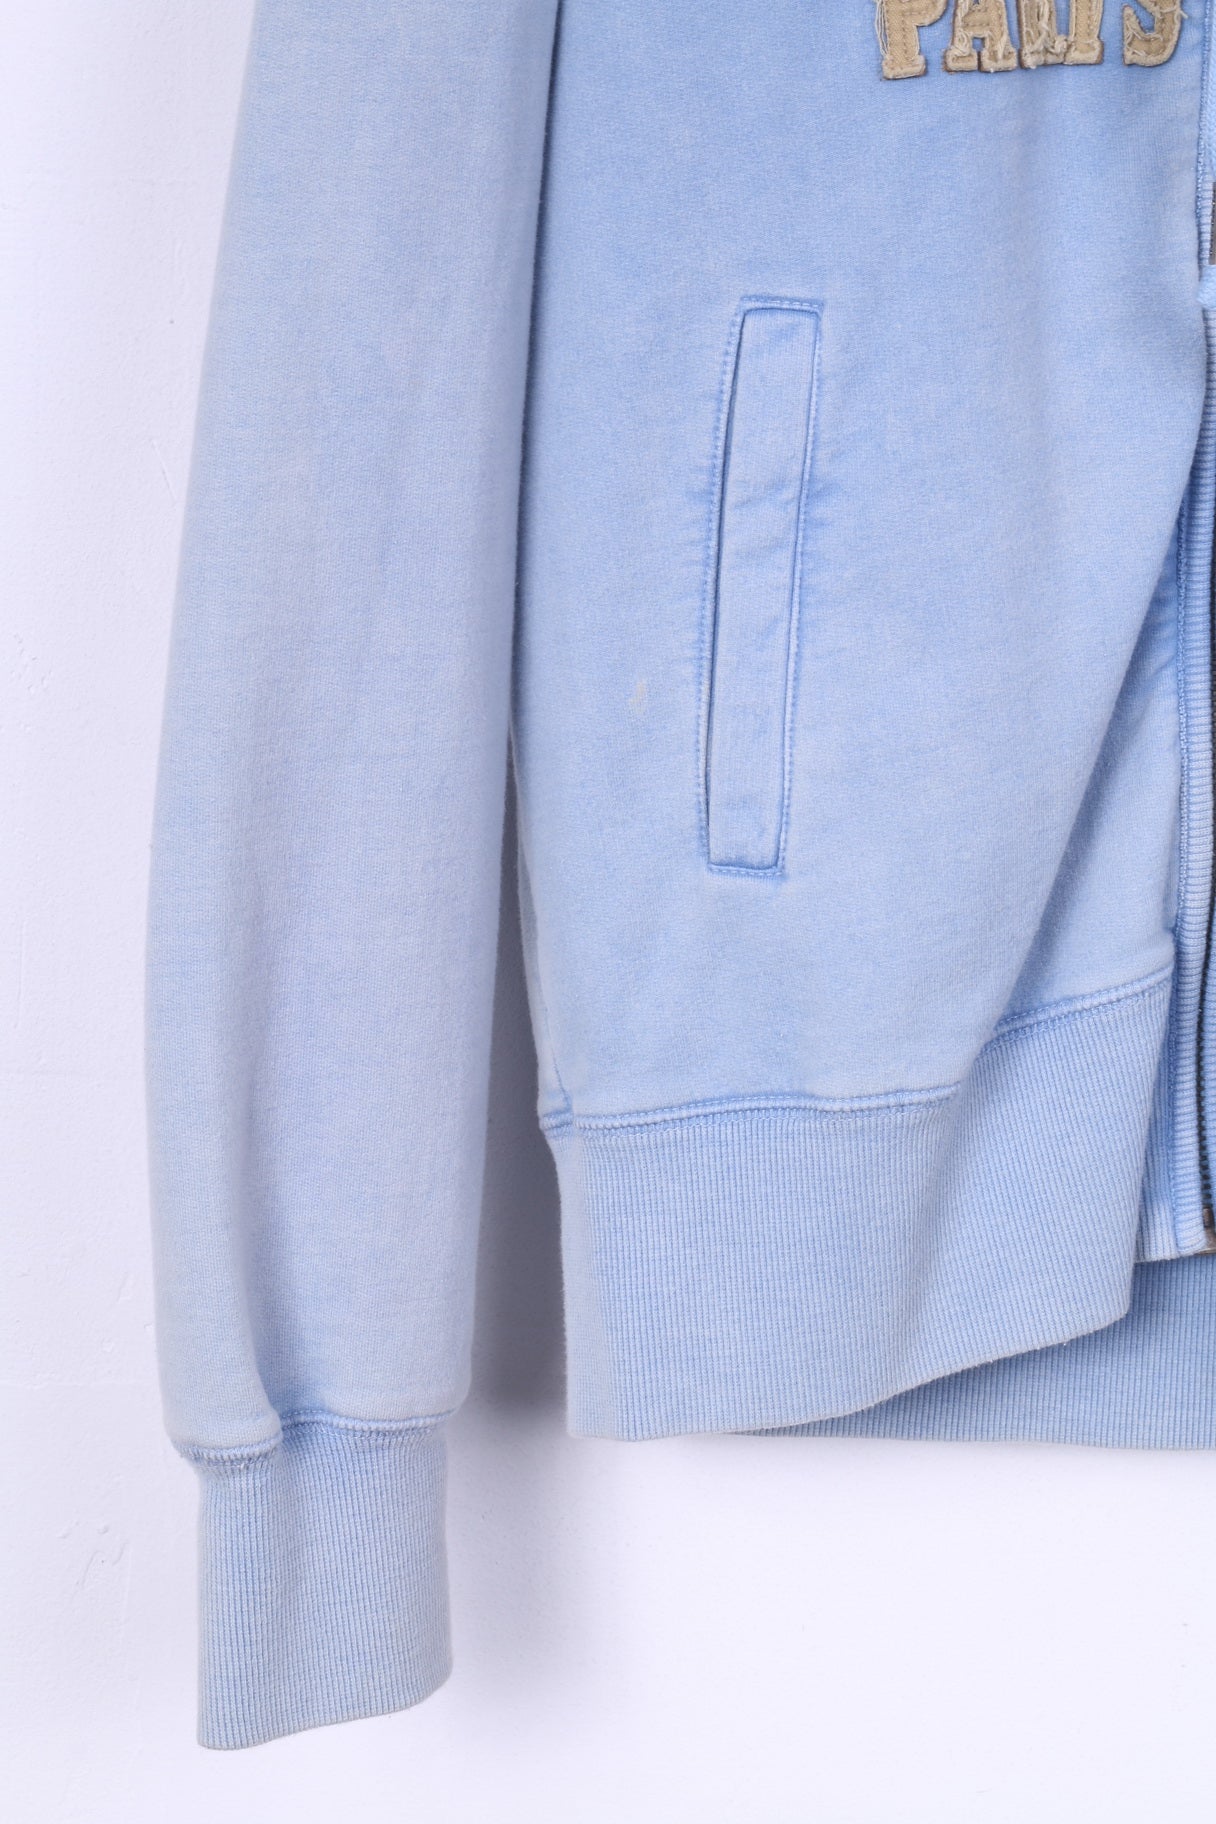 Crocker Mens XL Sweatshirt Hood Full Zipper Light Blue Wash Look